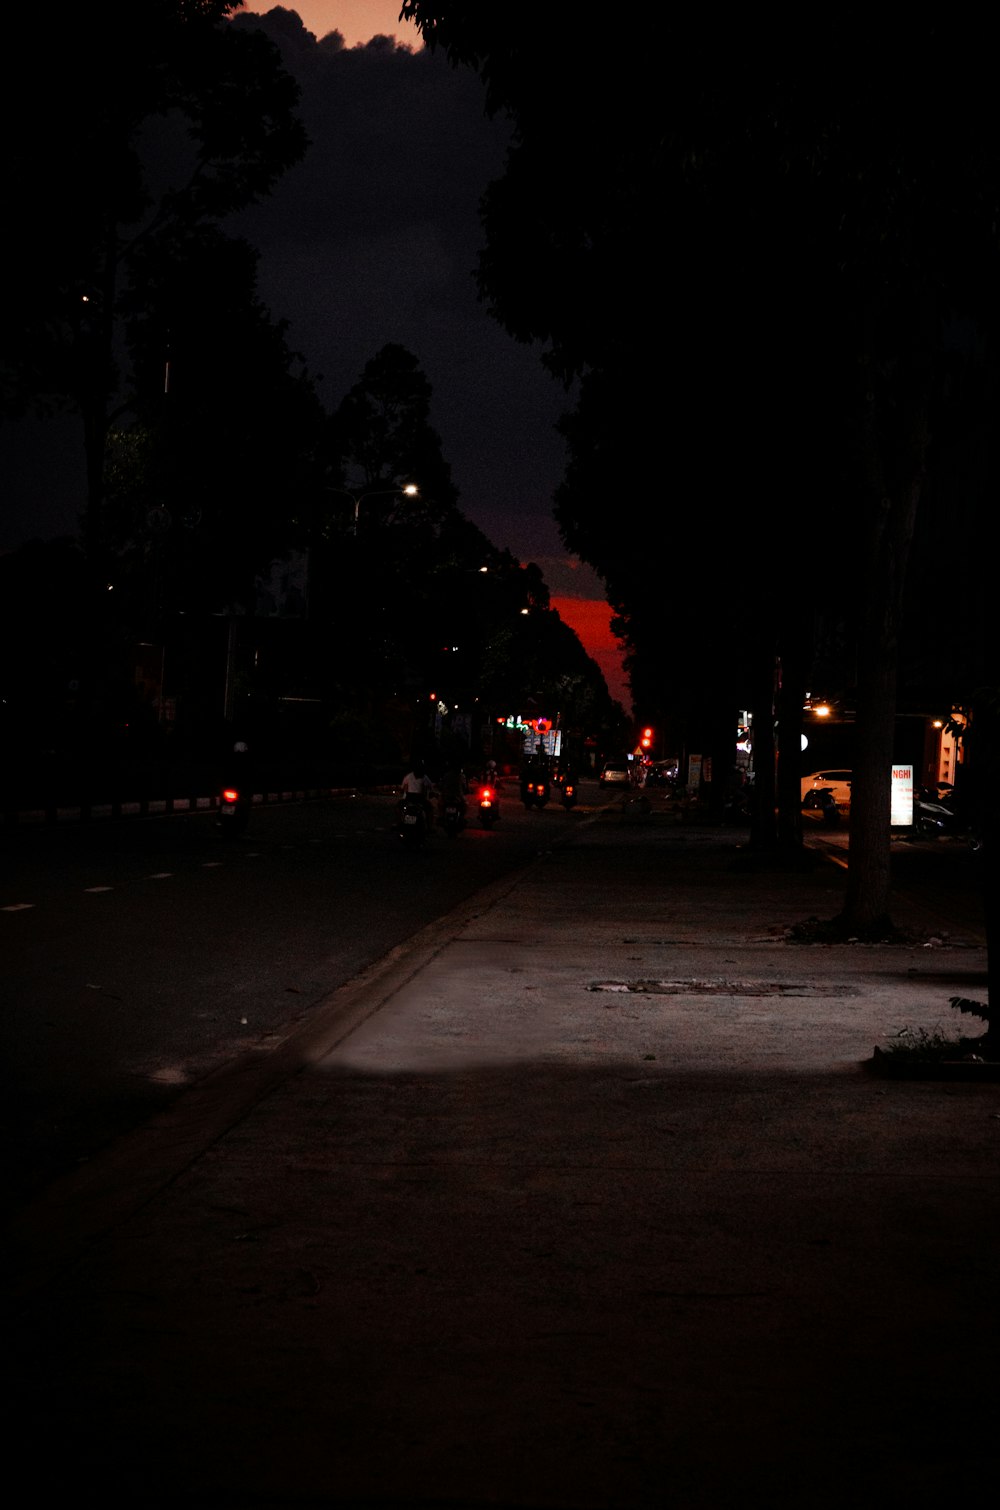 a dark street at night with a street light on